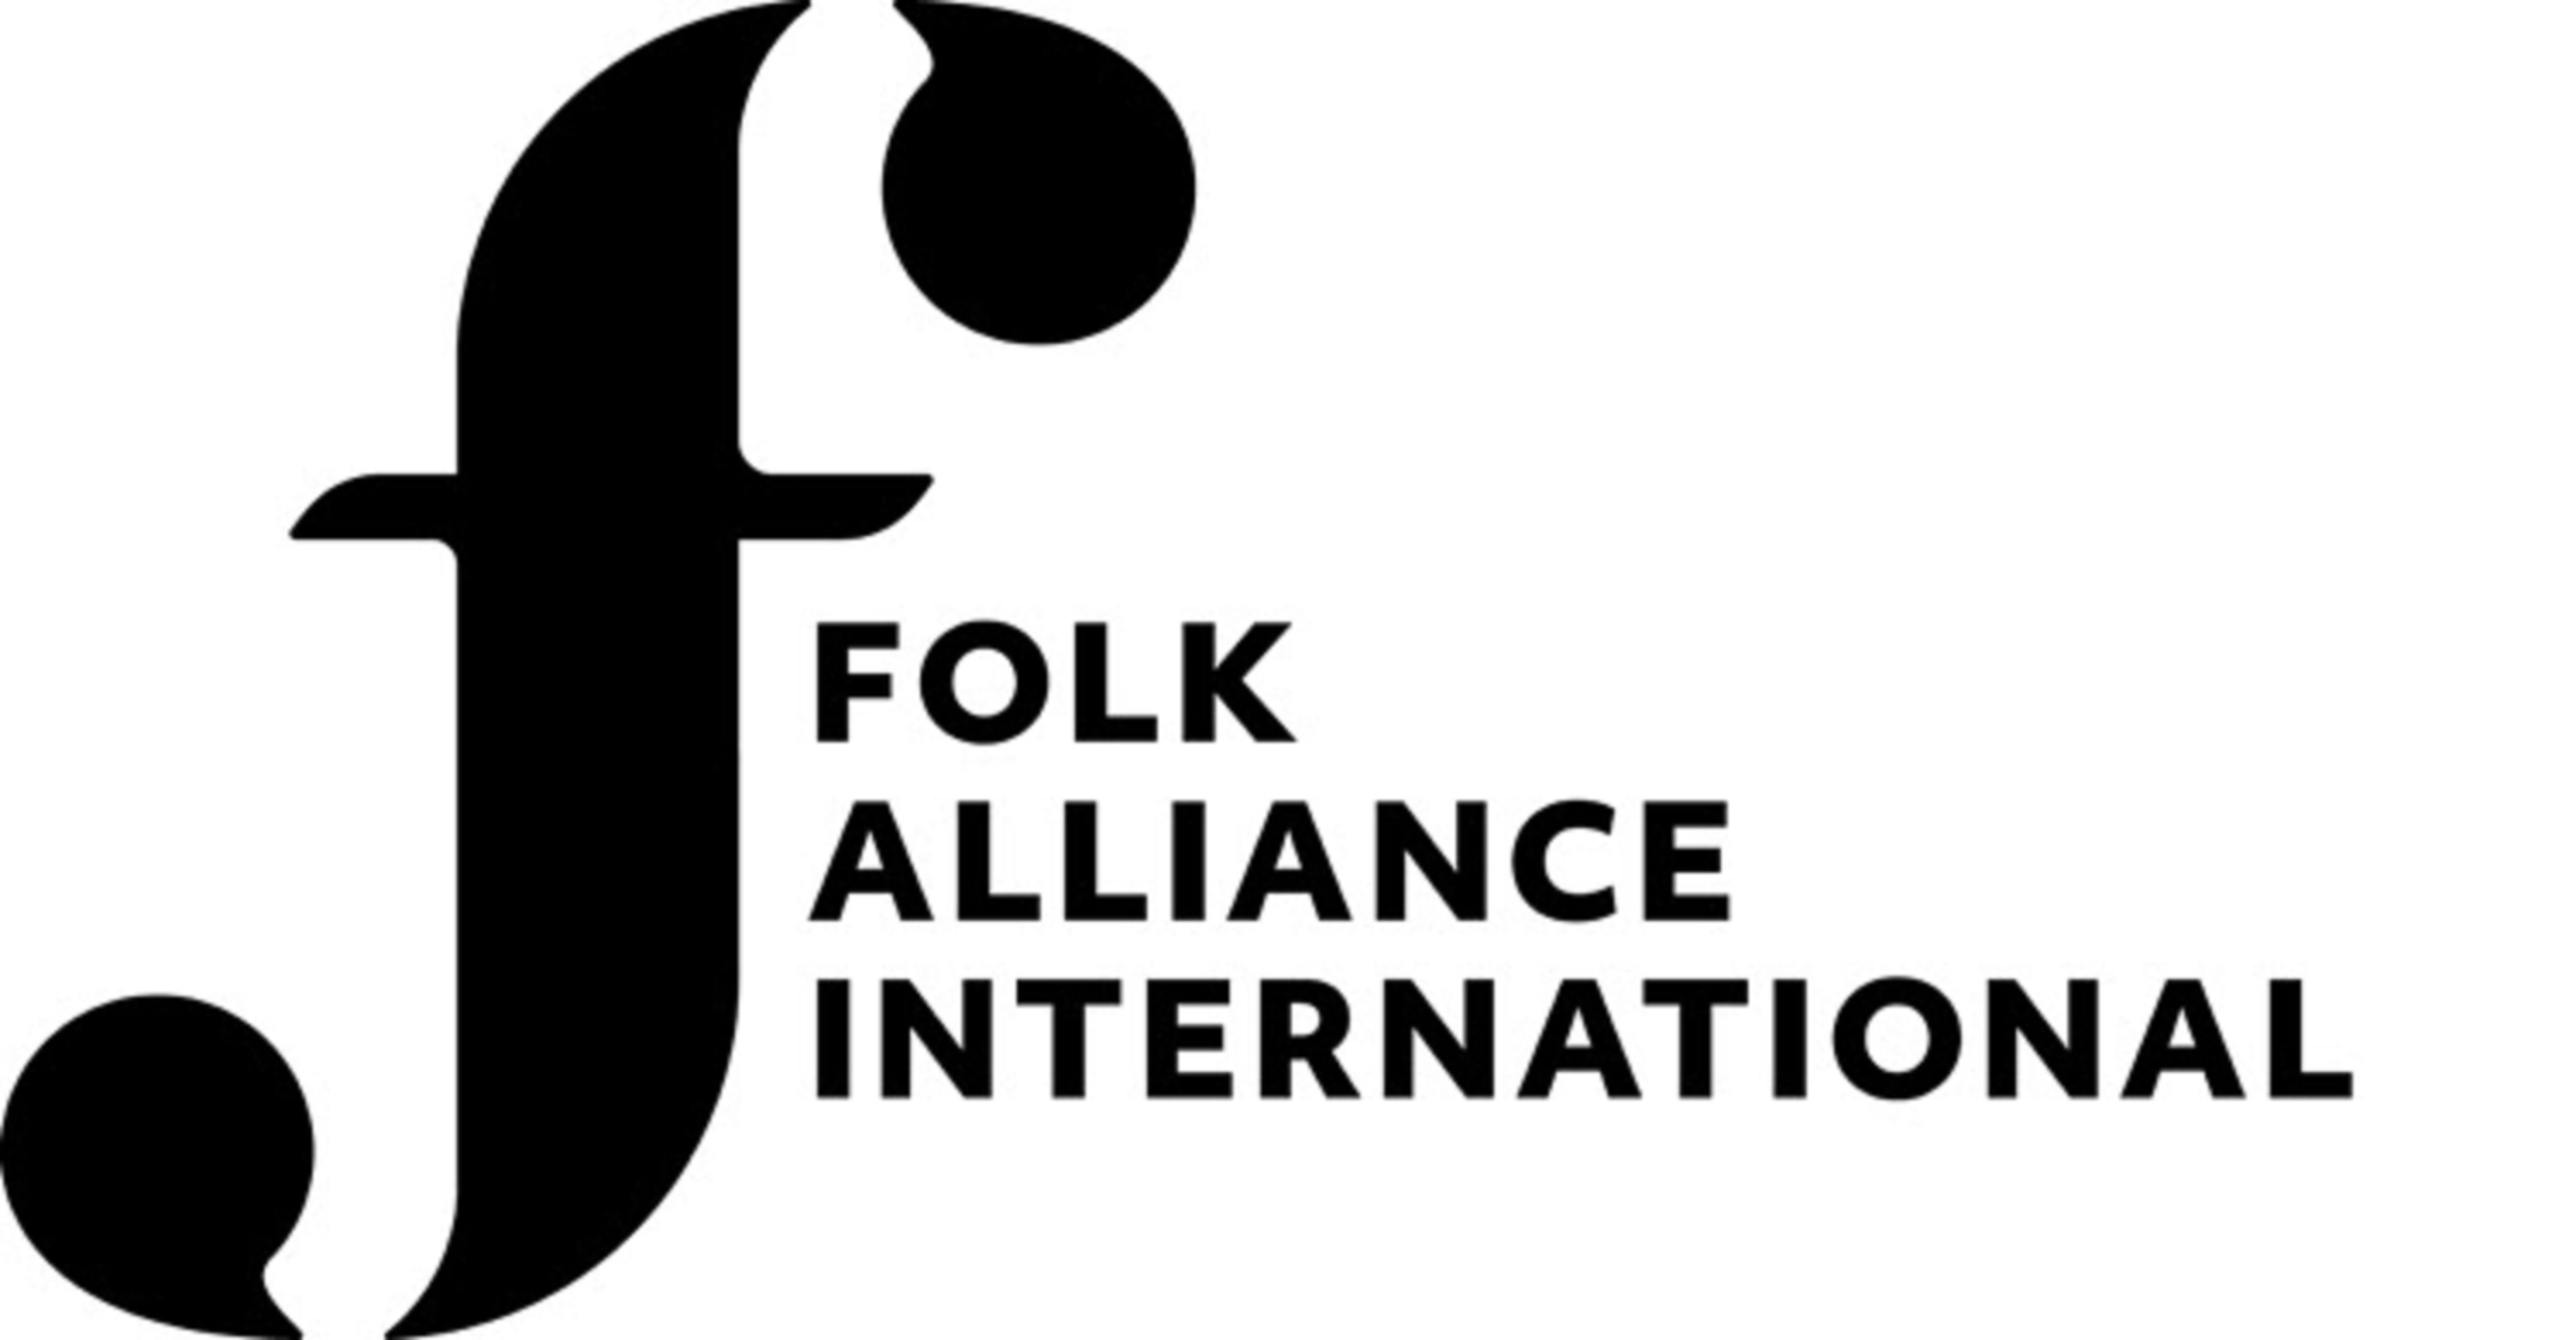 FOLK ALLIANCE INTERNATIONAL (FAI) CONFIRMS NOMINEES, HONOREES FOR INTERNATIONAL FOLK MUSIC AWARDS (IFMA)